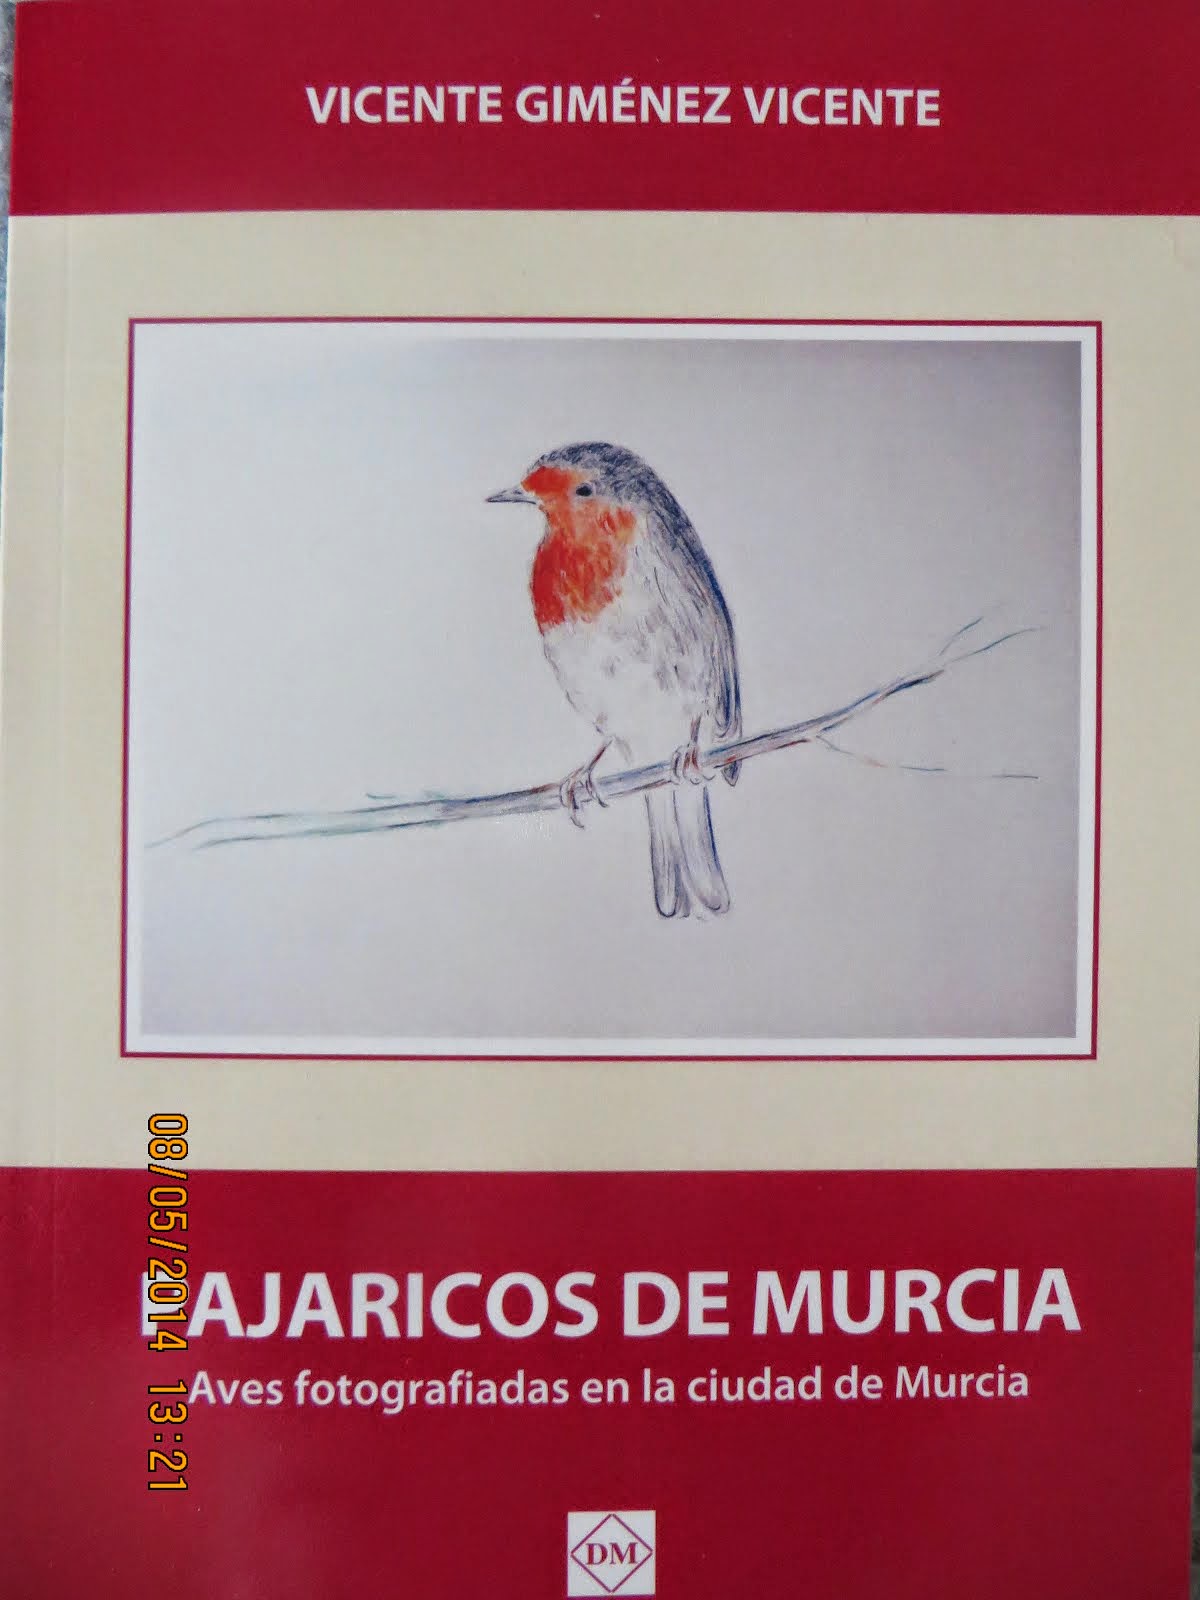 "Pajaricos de Murcia"